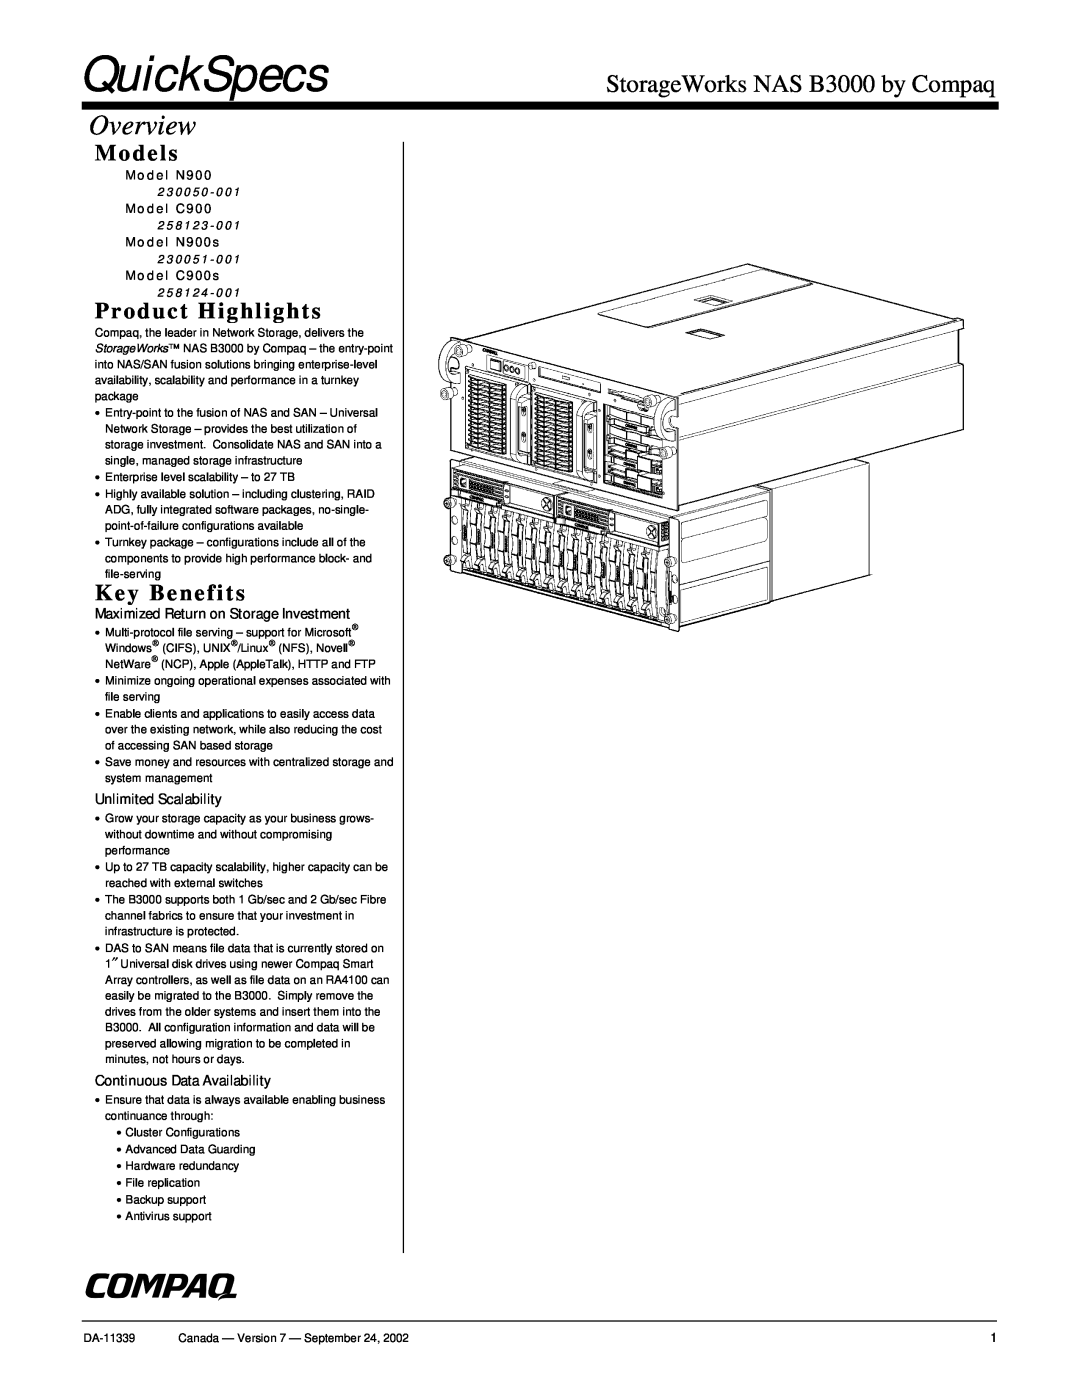 Compaq manual QuickSpecs, Overview, StorageWorks NAS B3000 by Compaq, Models, Product Highlights, Key Benefits 